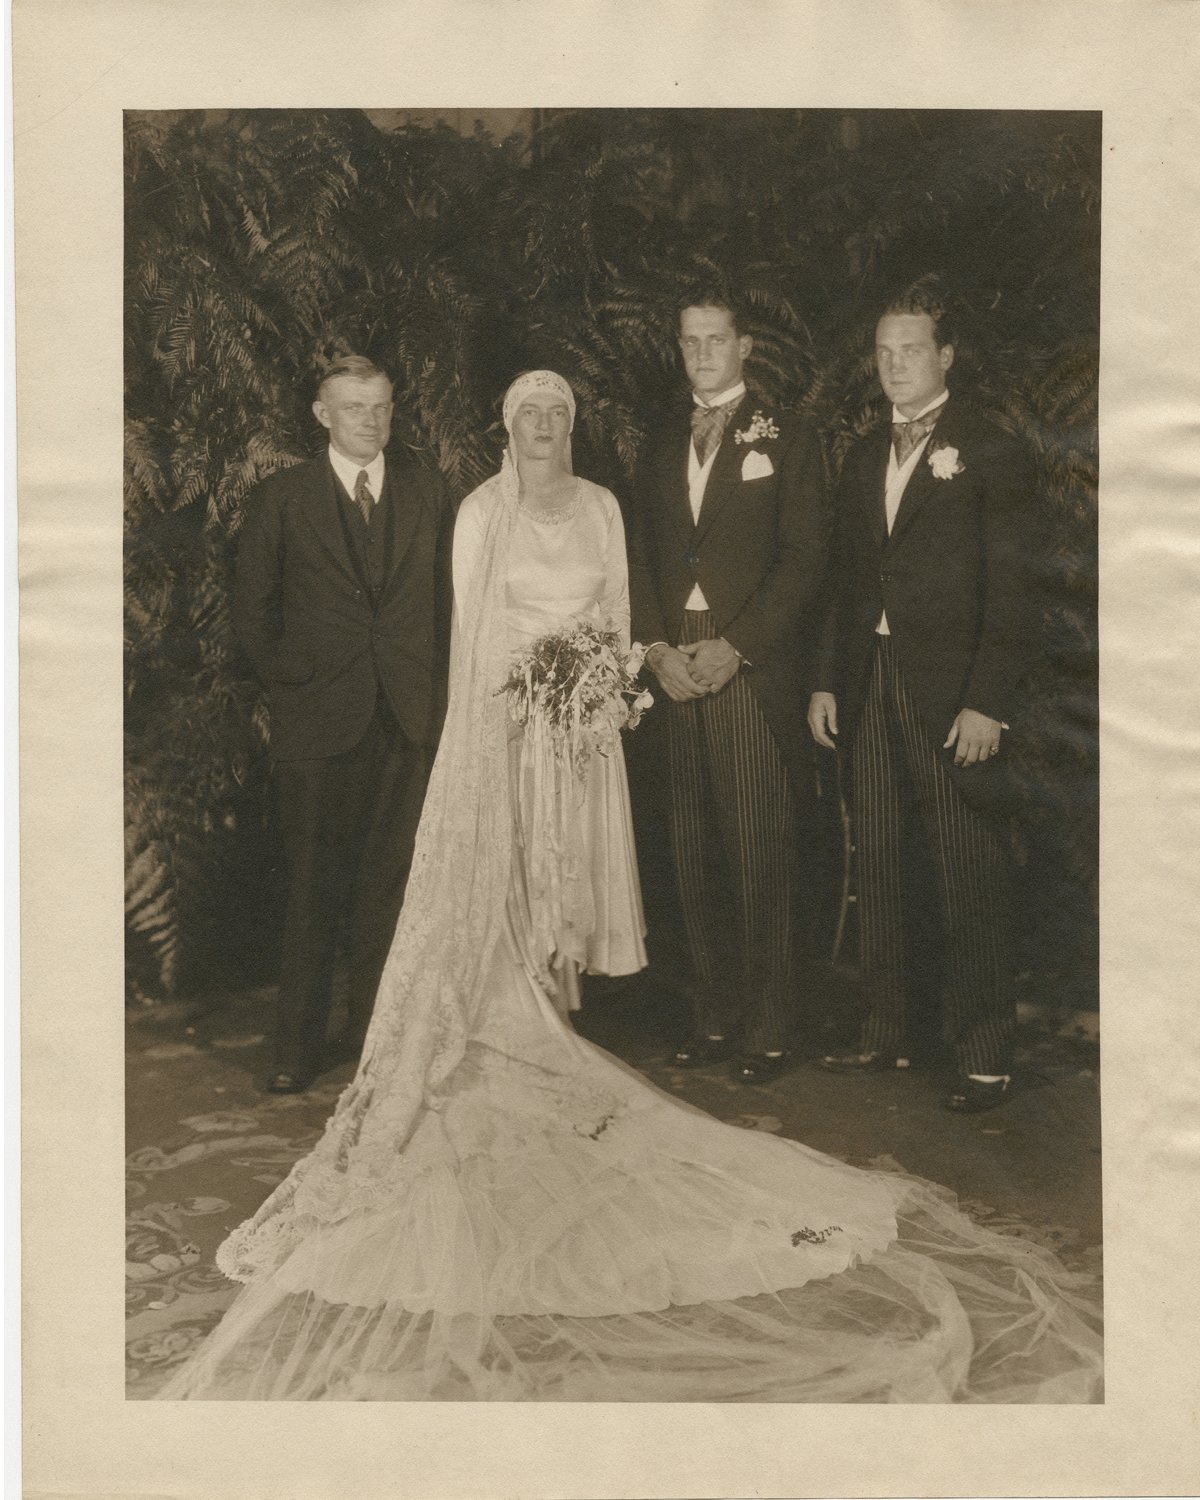 Gertrude and Sidney’s wedding portrait, 1929